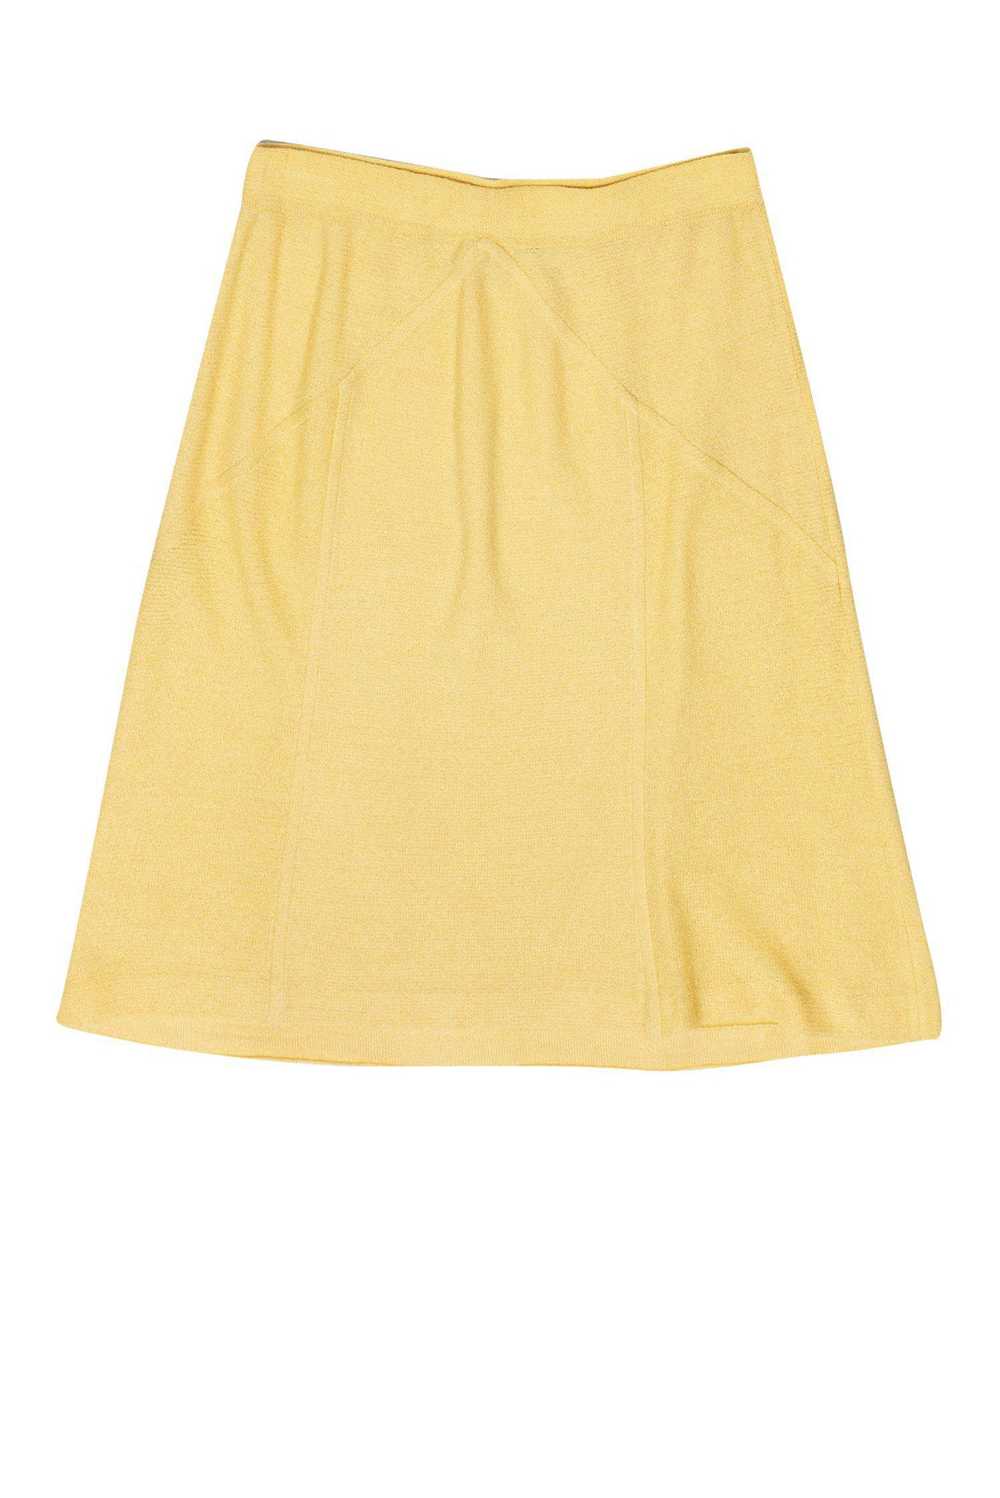 St. John - Light Yellow Knit Skirt Sz 4 - image 1